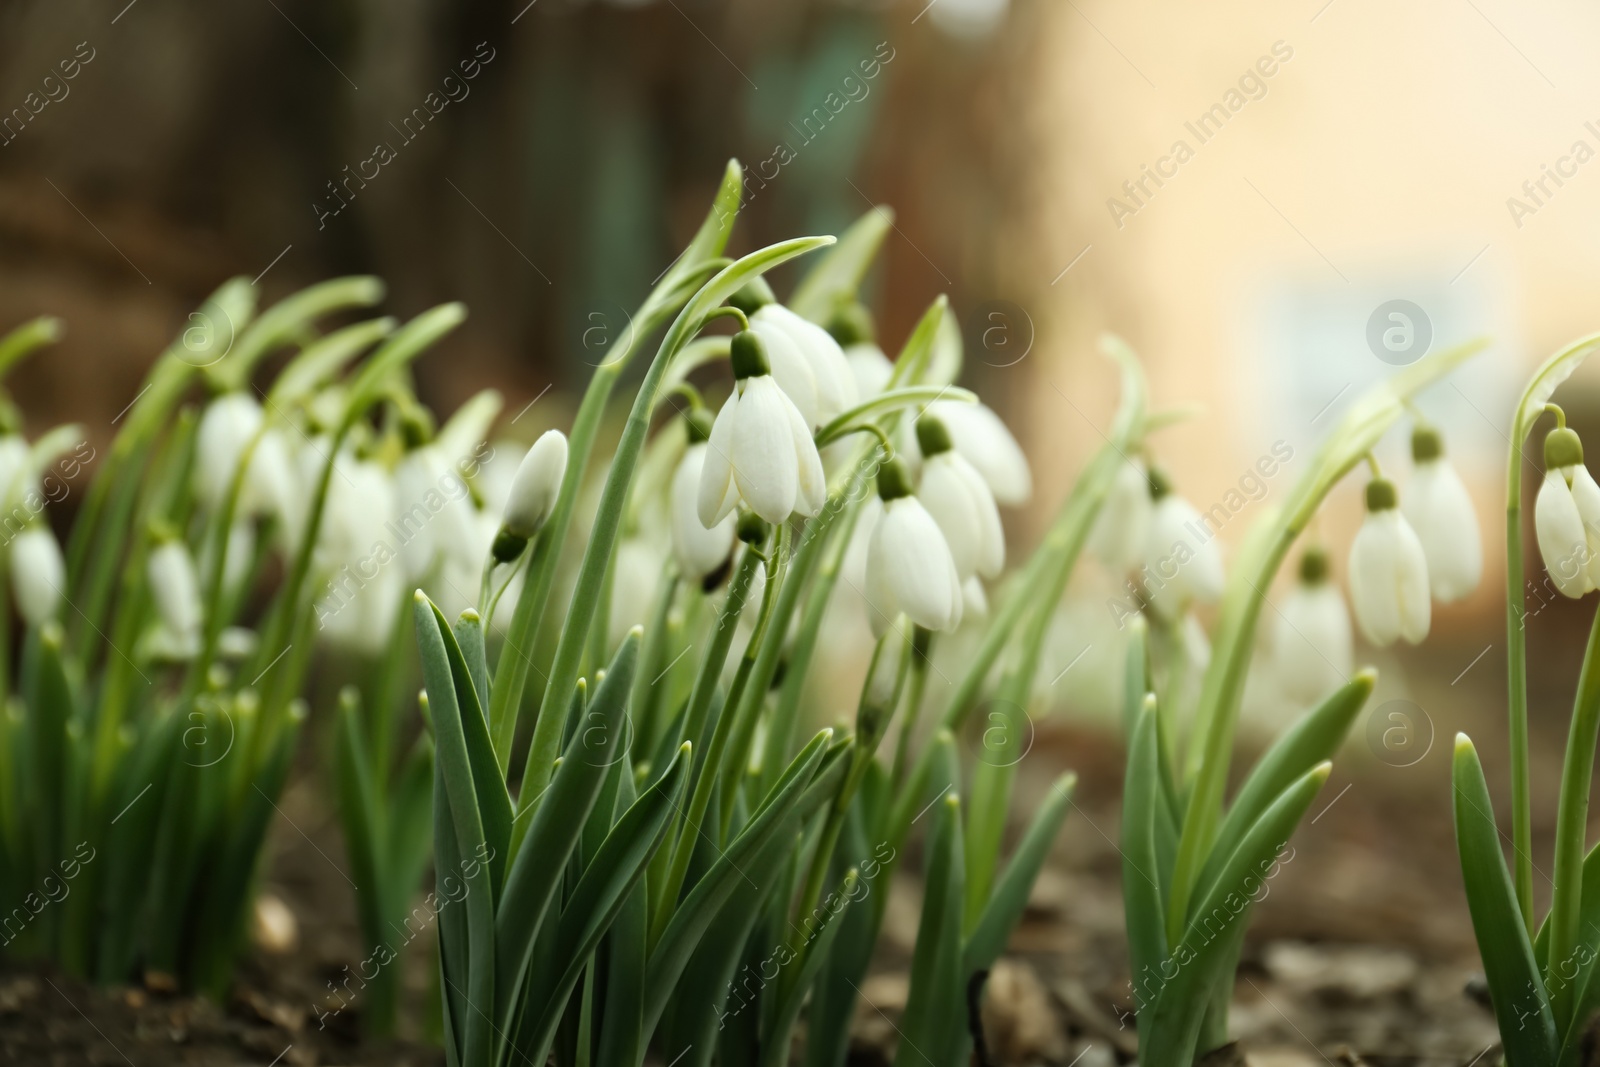 Photo of Fresh blooming snowdrop flowers growing in soil outdoors